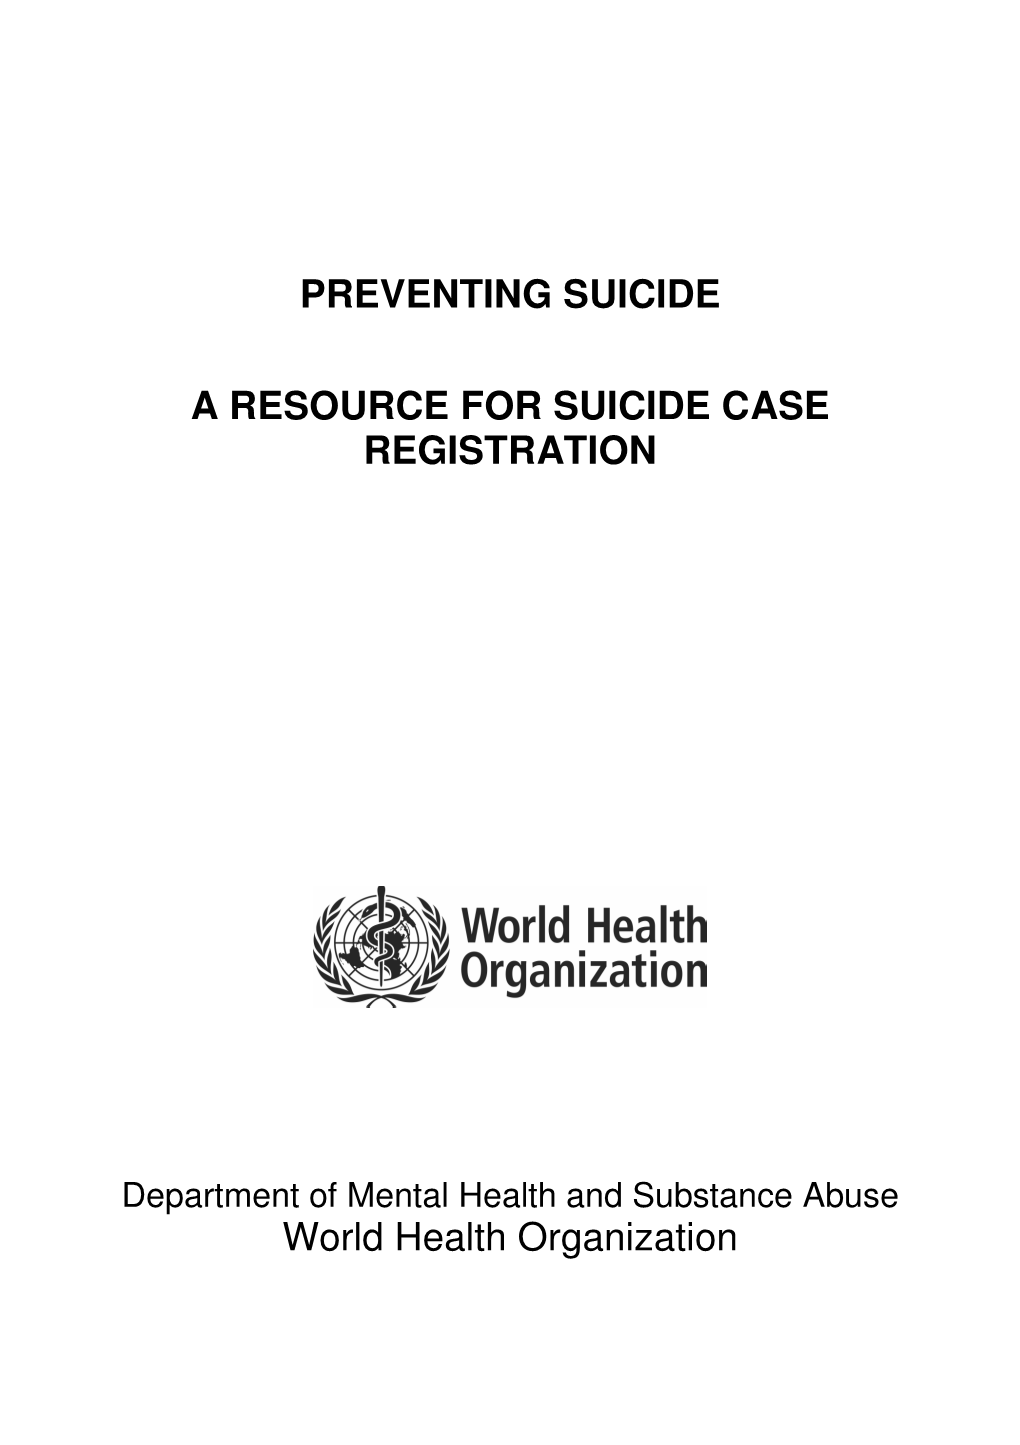 A Resource for Suicide Case Registration